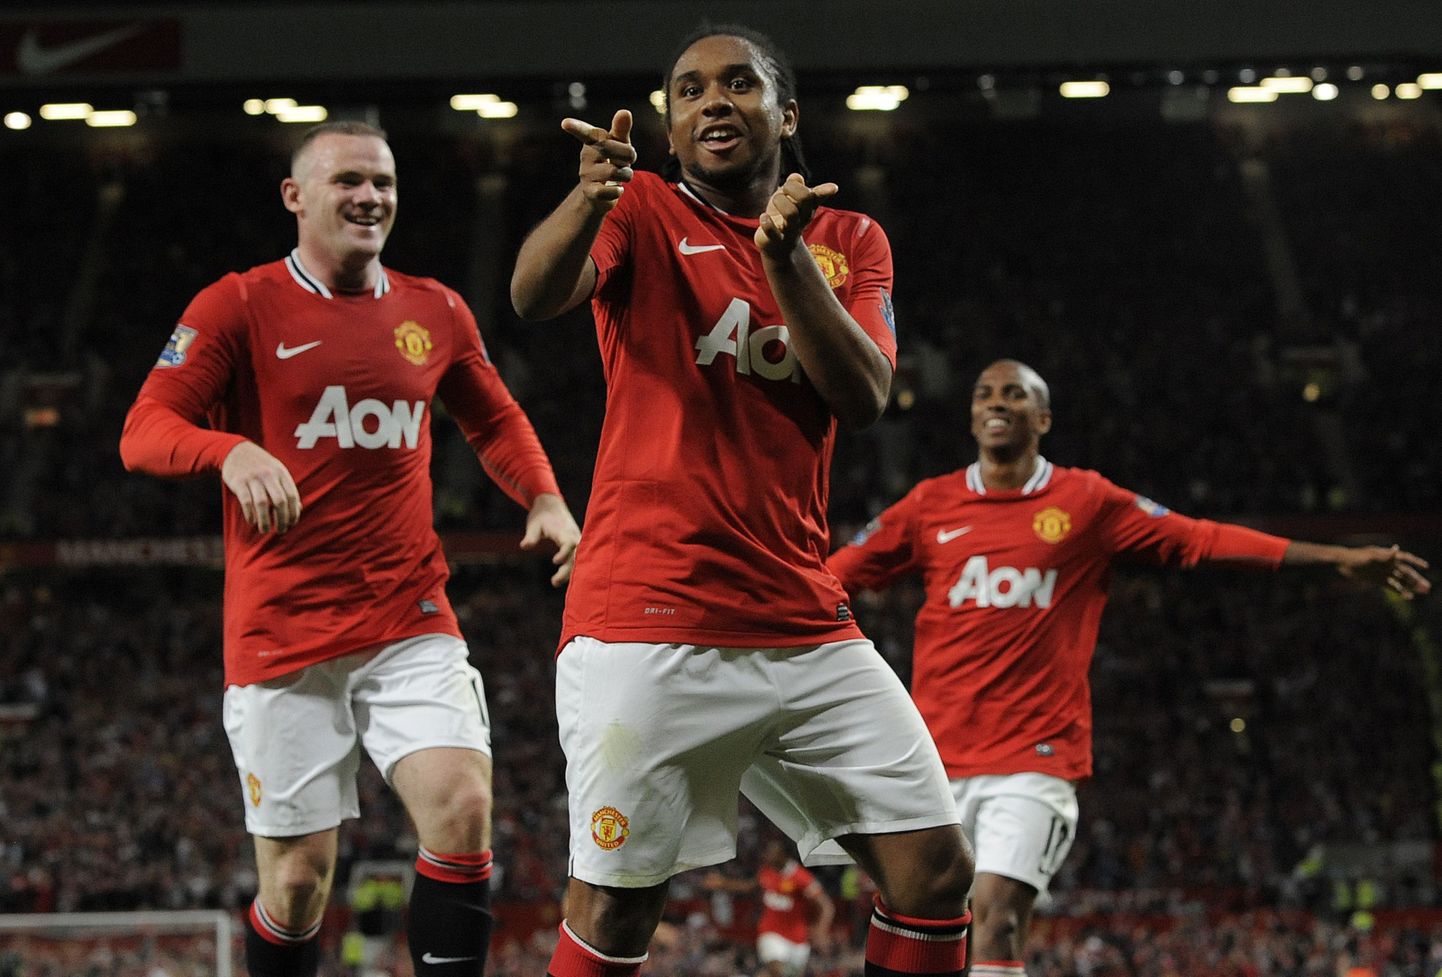 Anderson (keskel) Manchester Unitedi särgis väravat tähistamas.